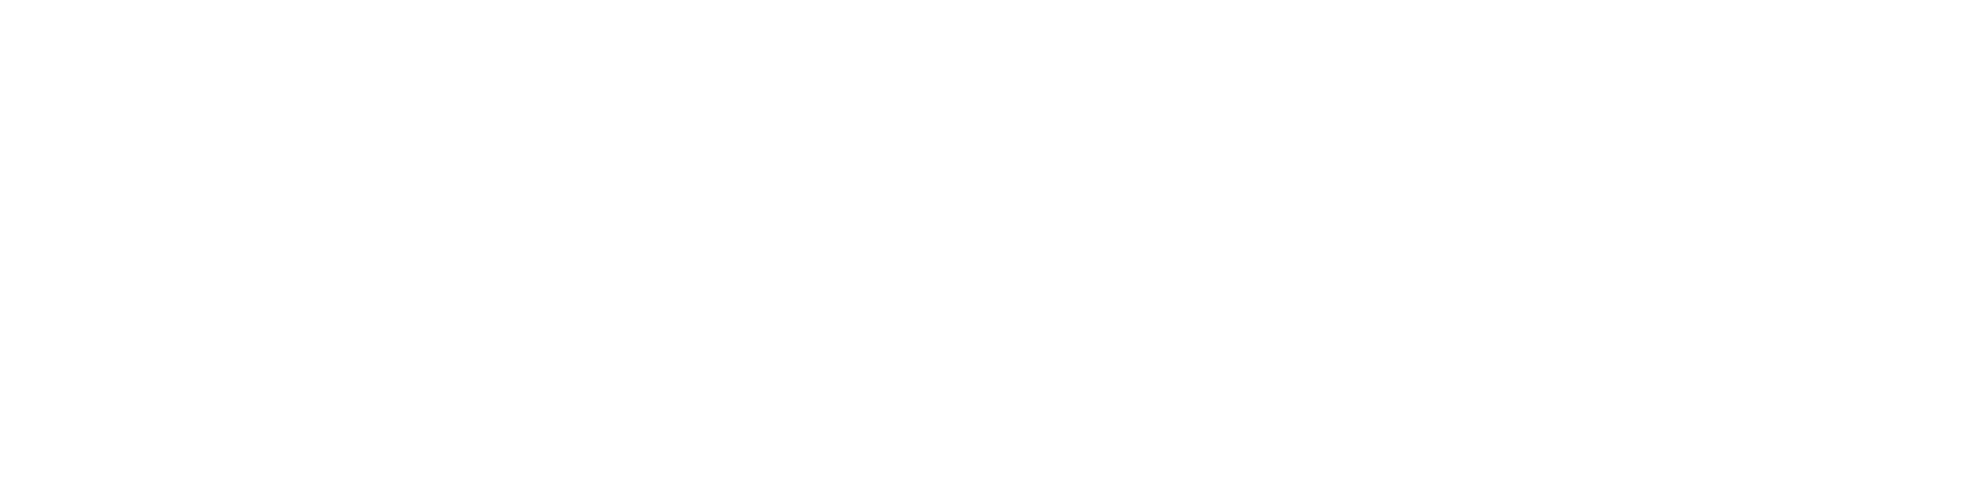 Rural.FM logo